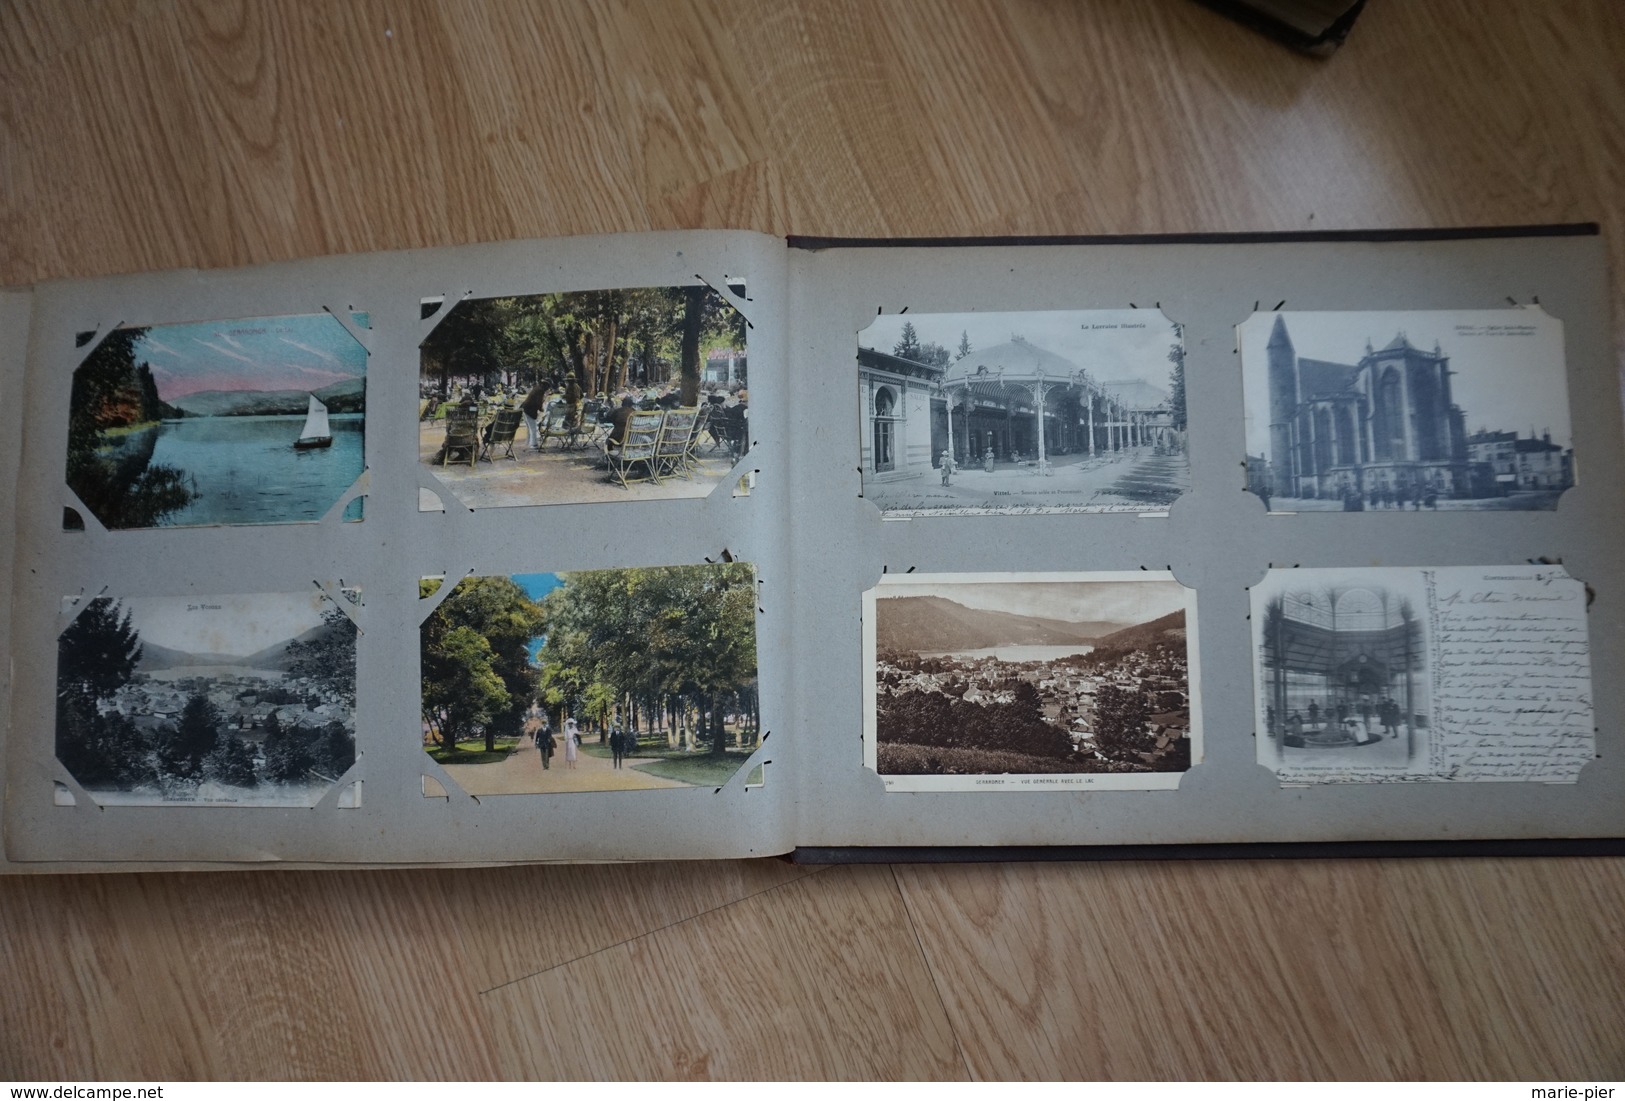 album  de cartes postales anciennes, 384 cartes